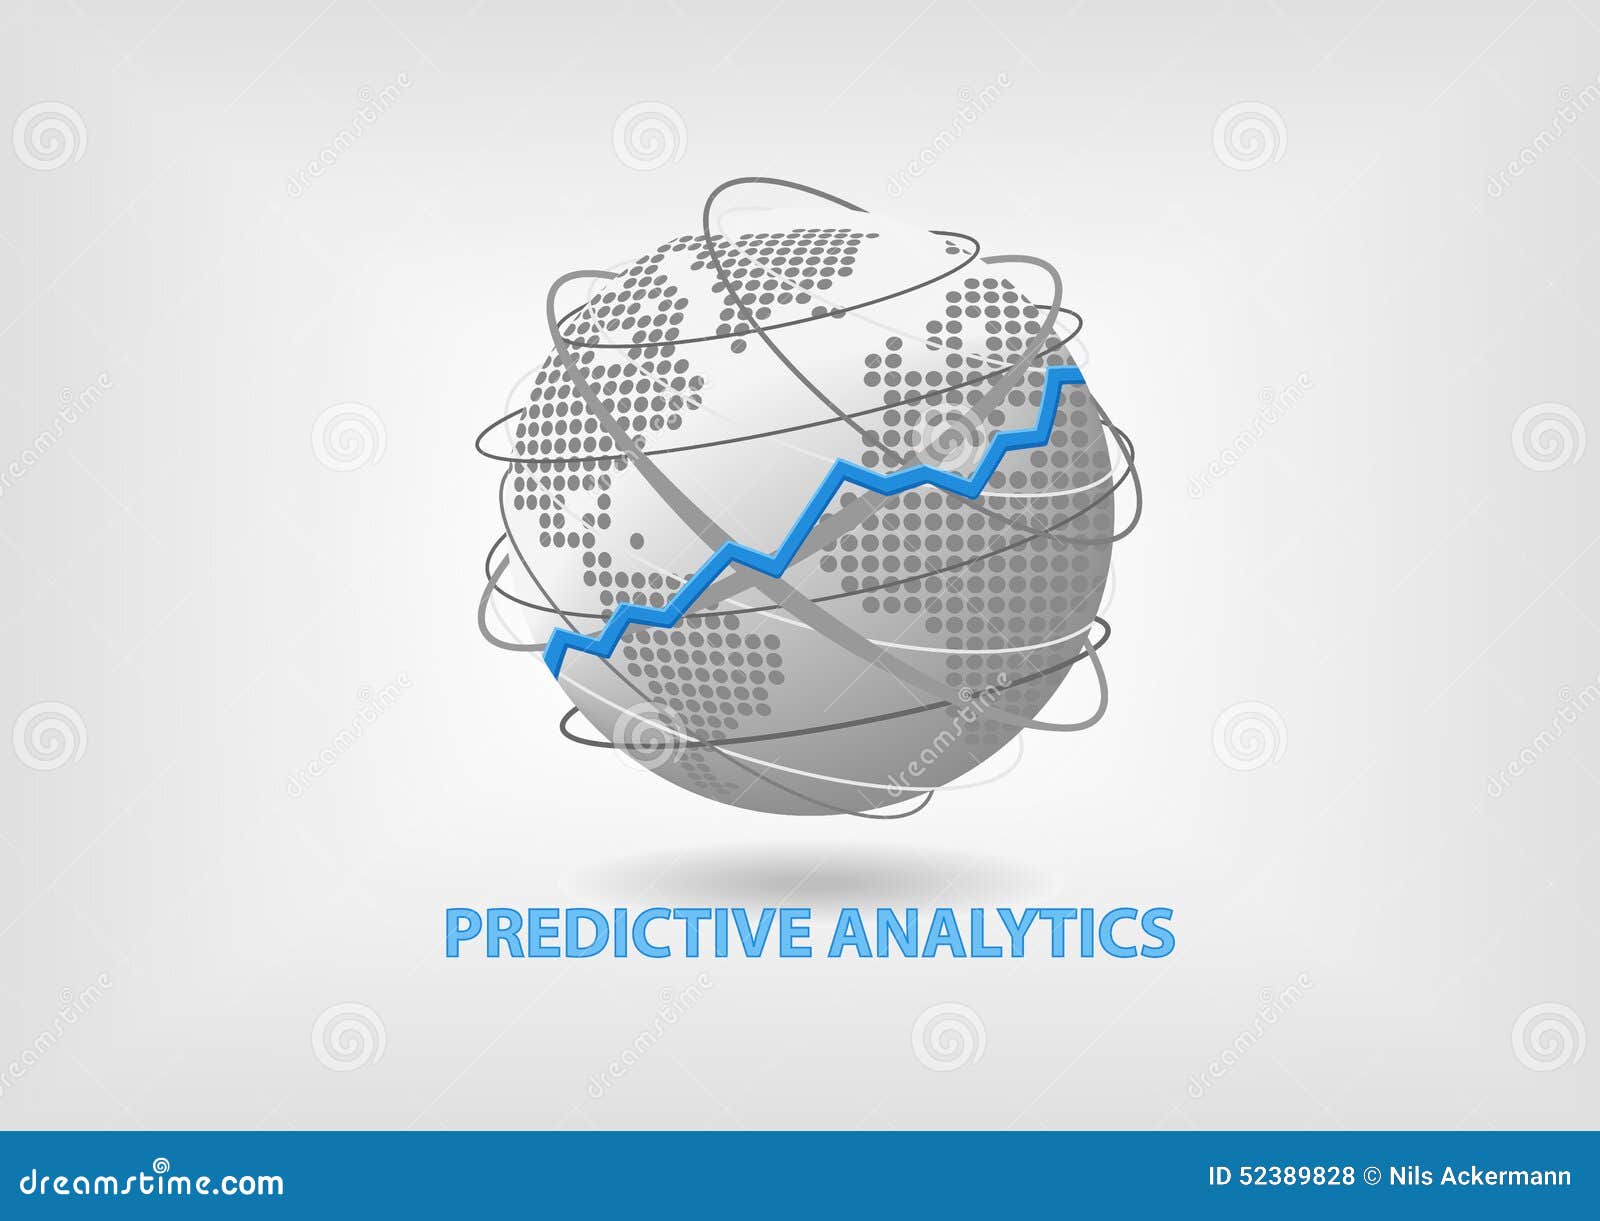 Predictive Analytics Concept As Illustration. Stock Vector ...